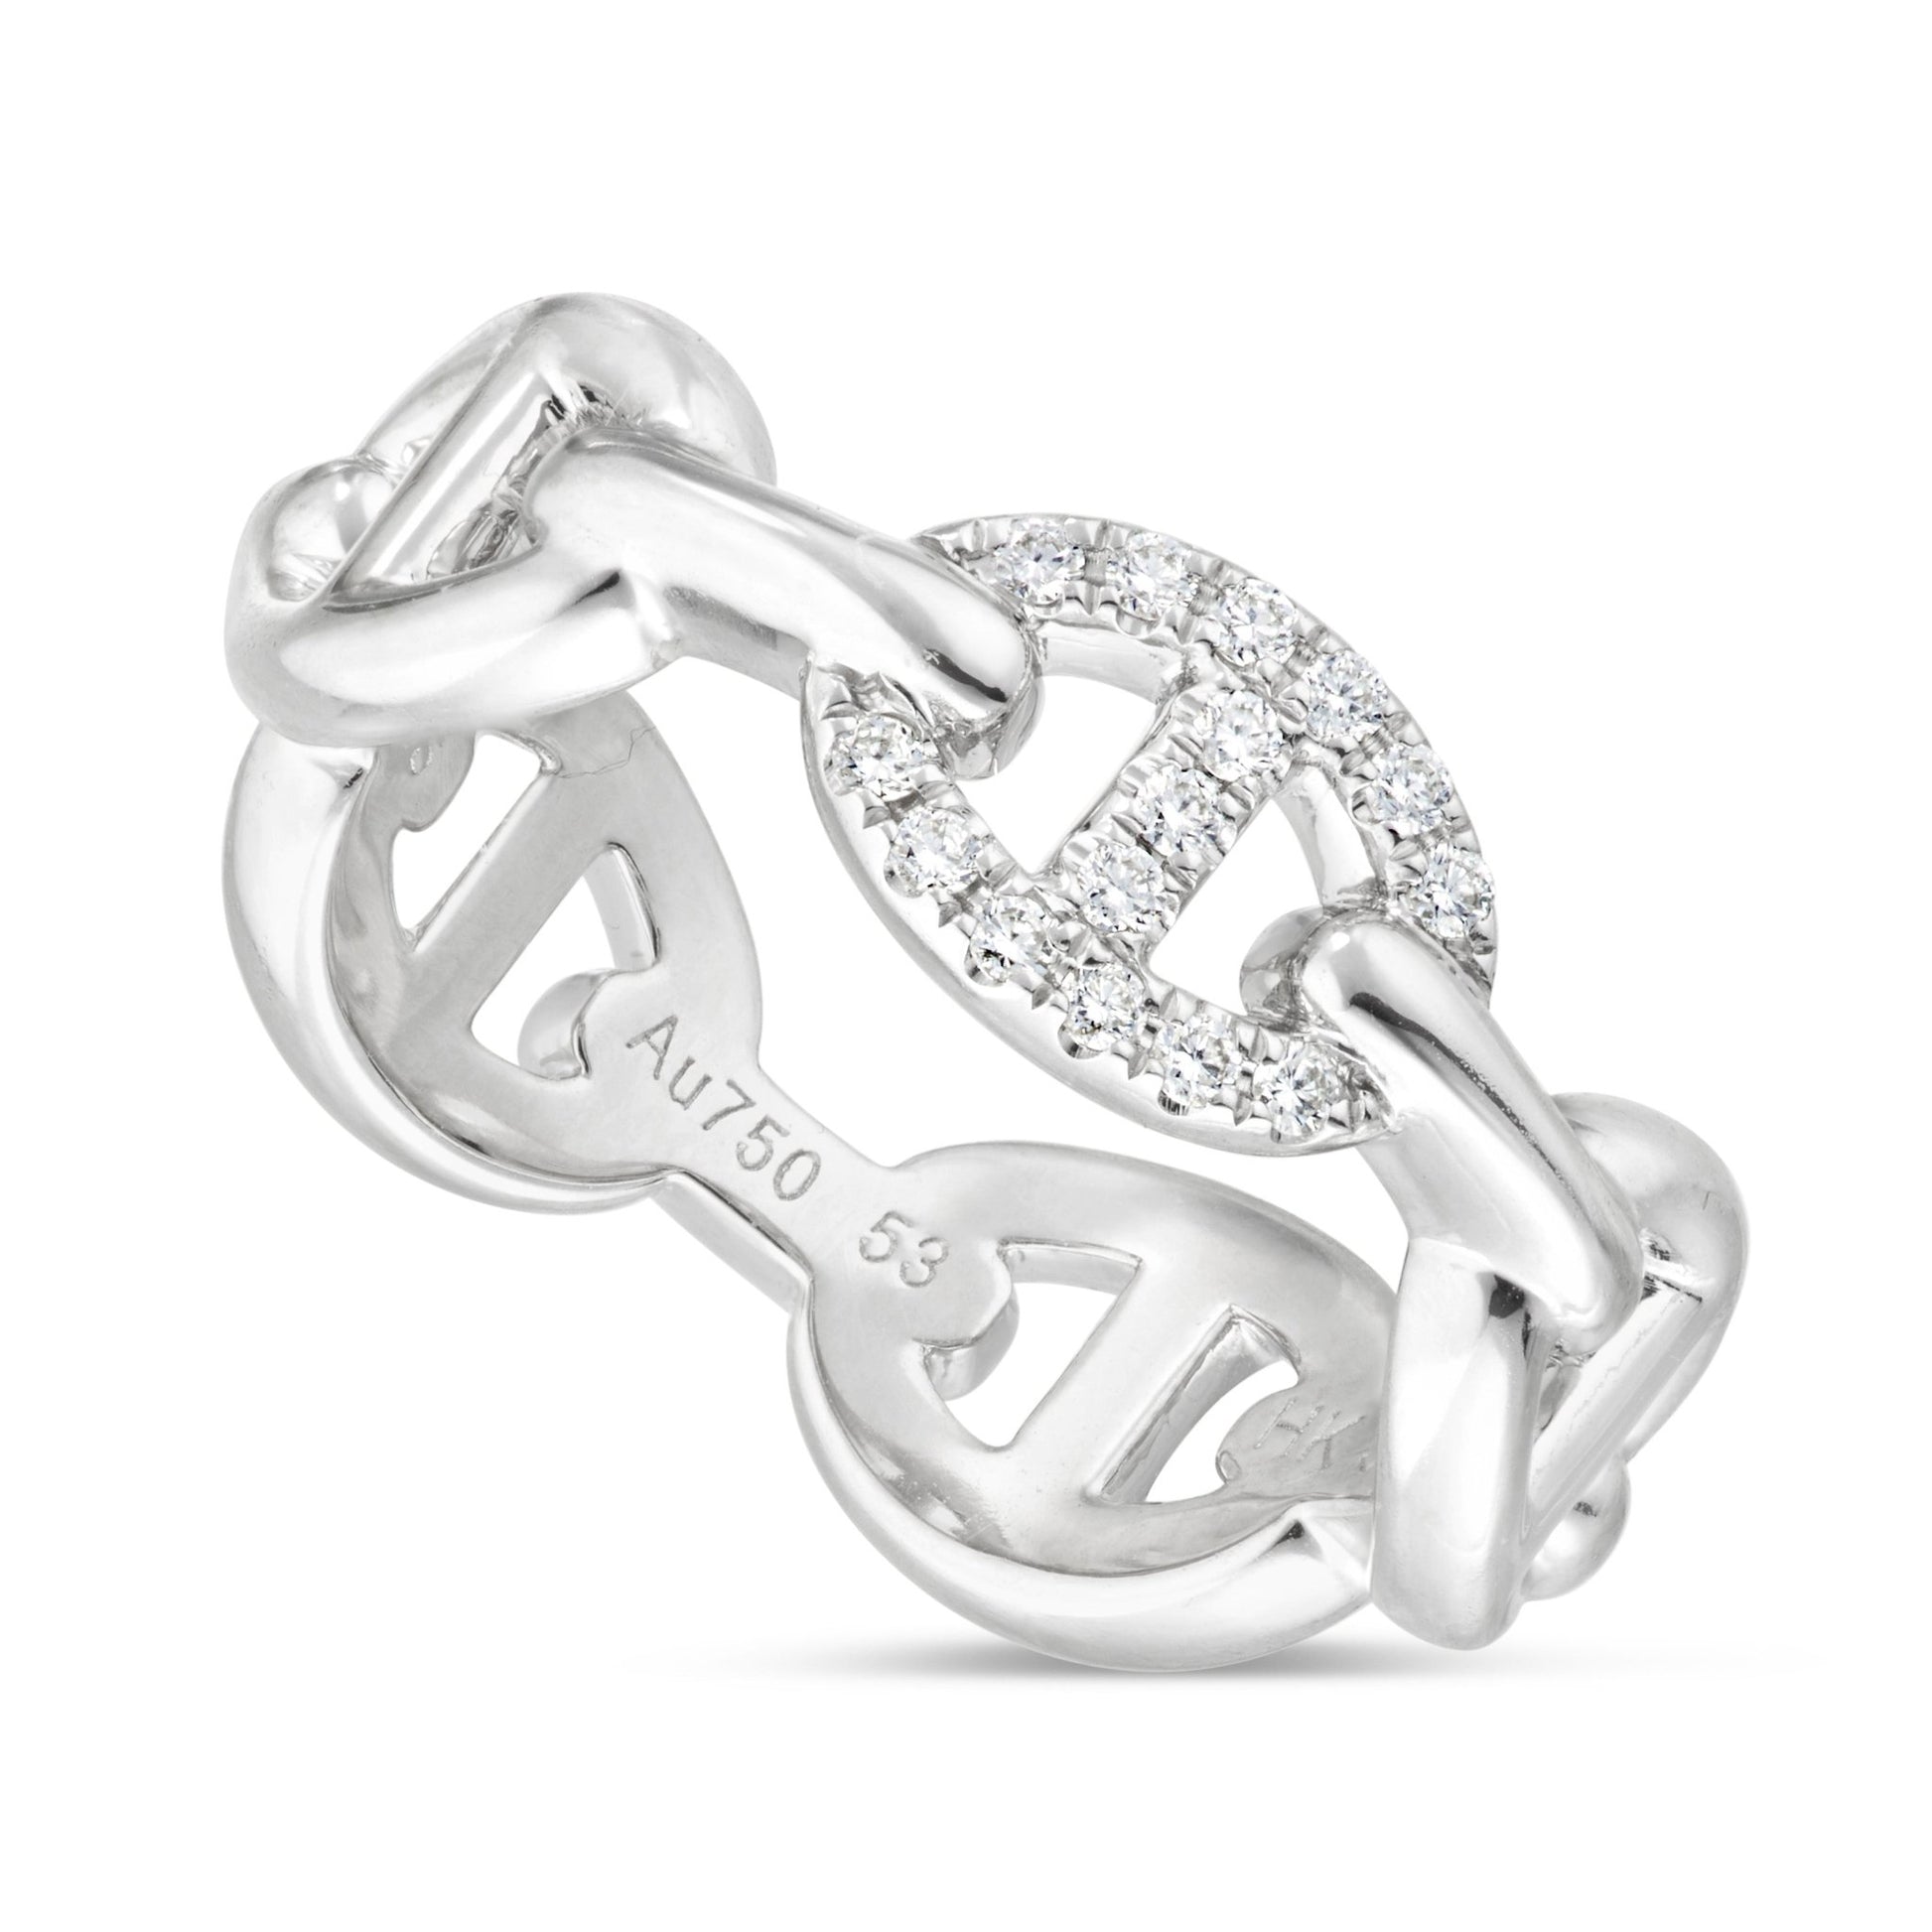 Hermes Link Ring with Diamonds - Shyne Jewelers White Gold 4 Shyne Jewelers